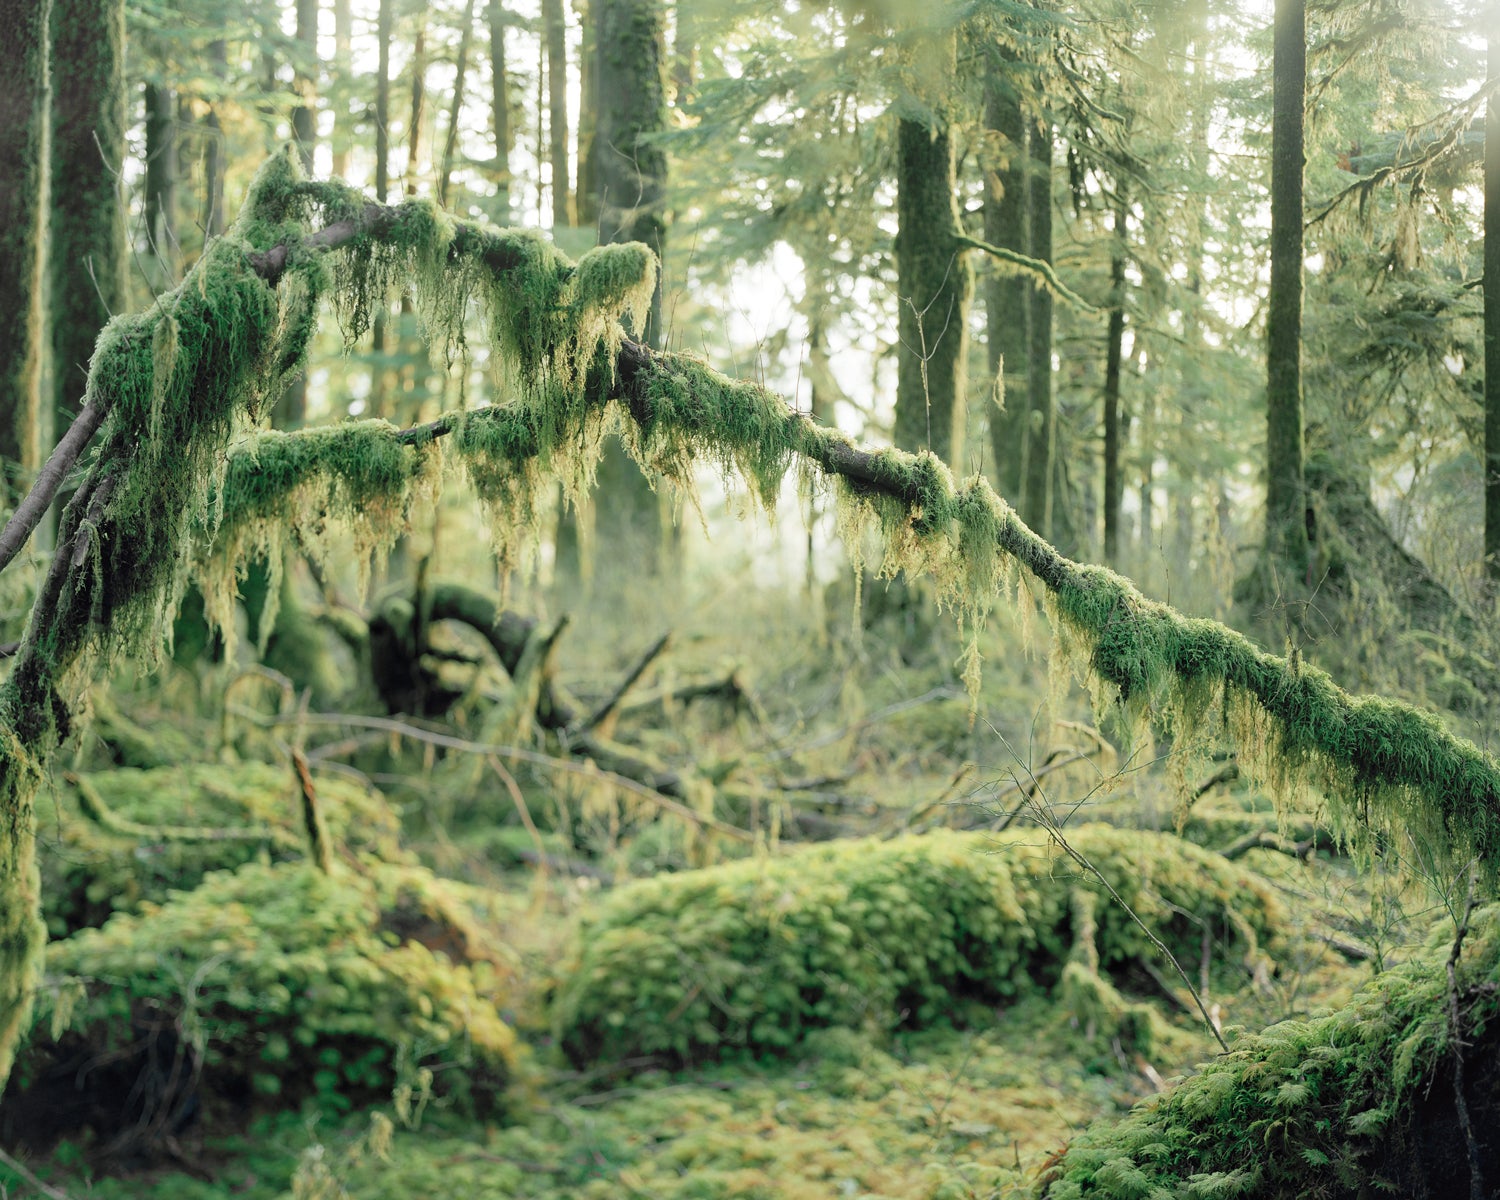 Hoh Rainforest in Washington state, US